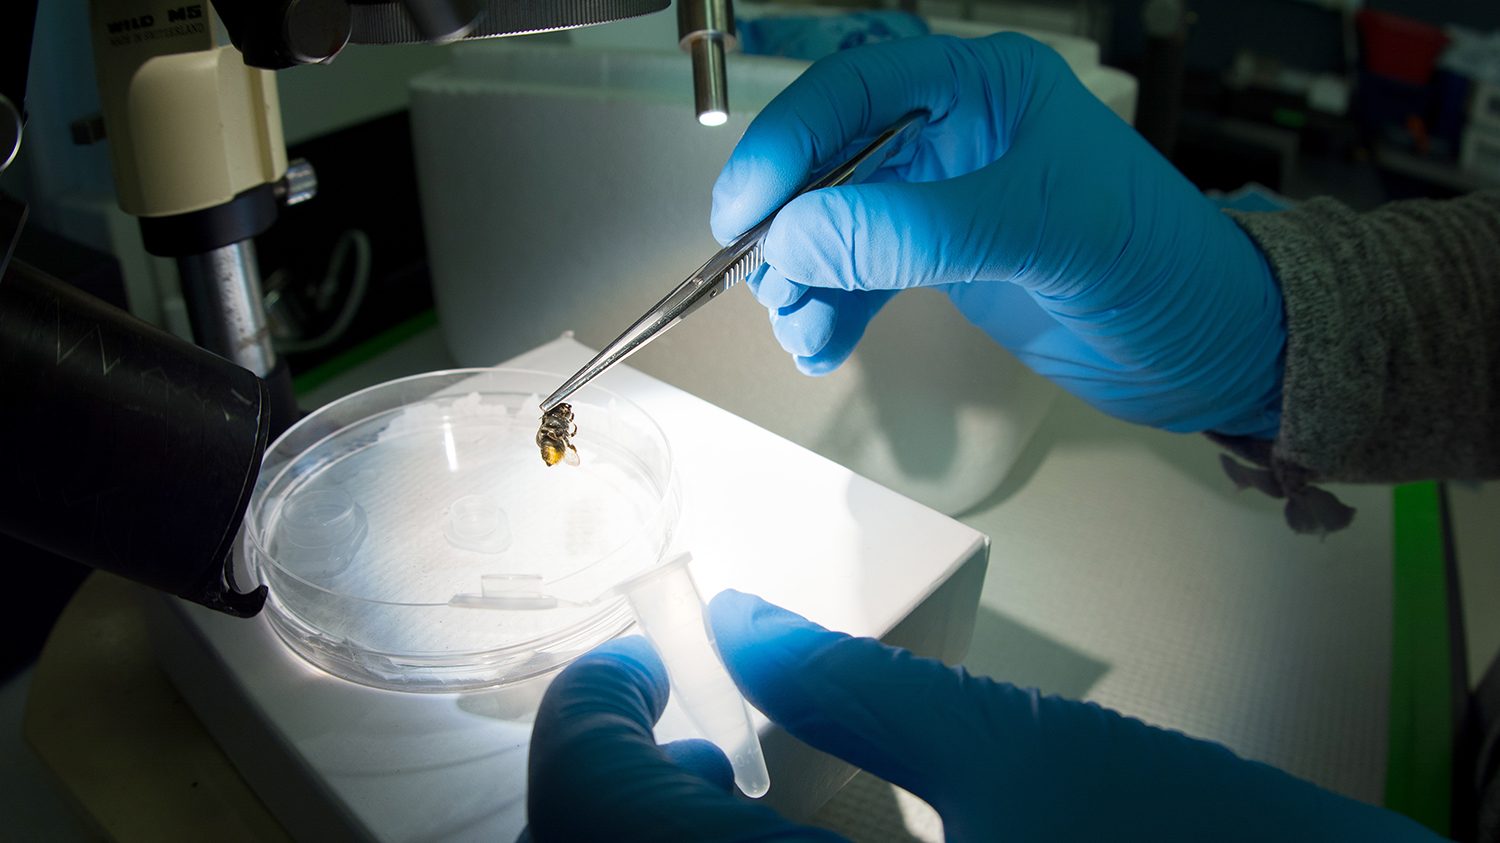 Examining bee under microscope